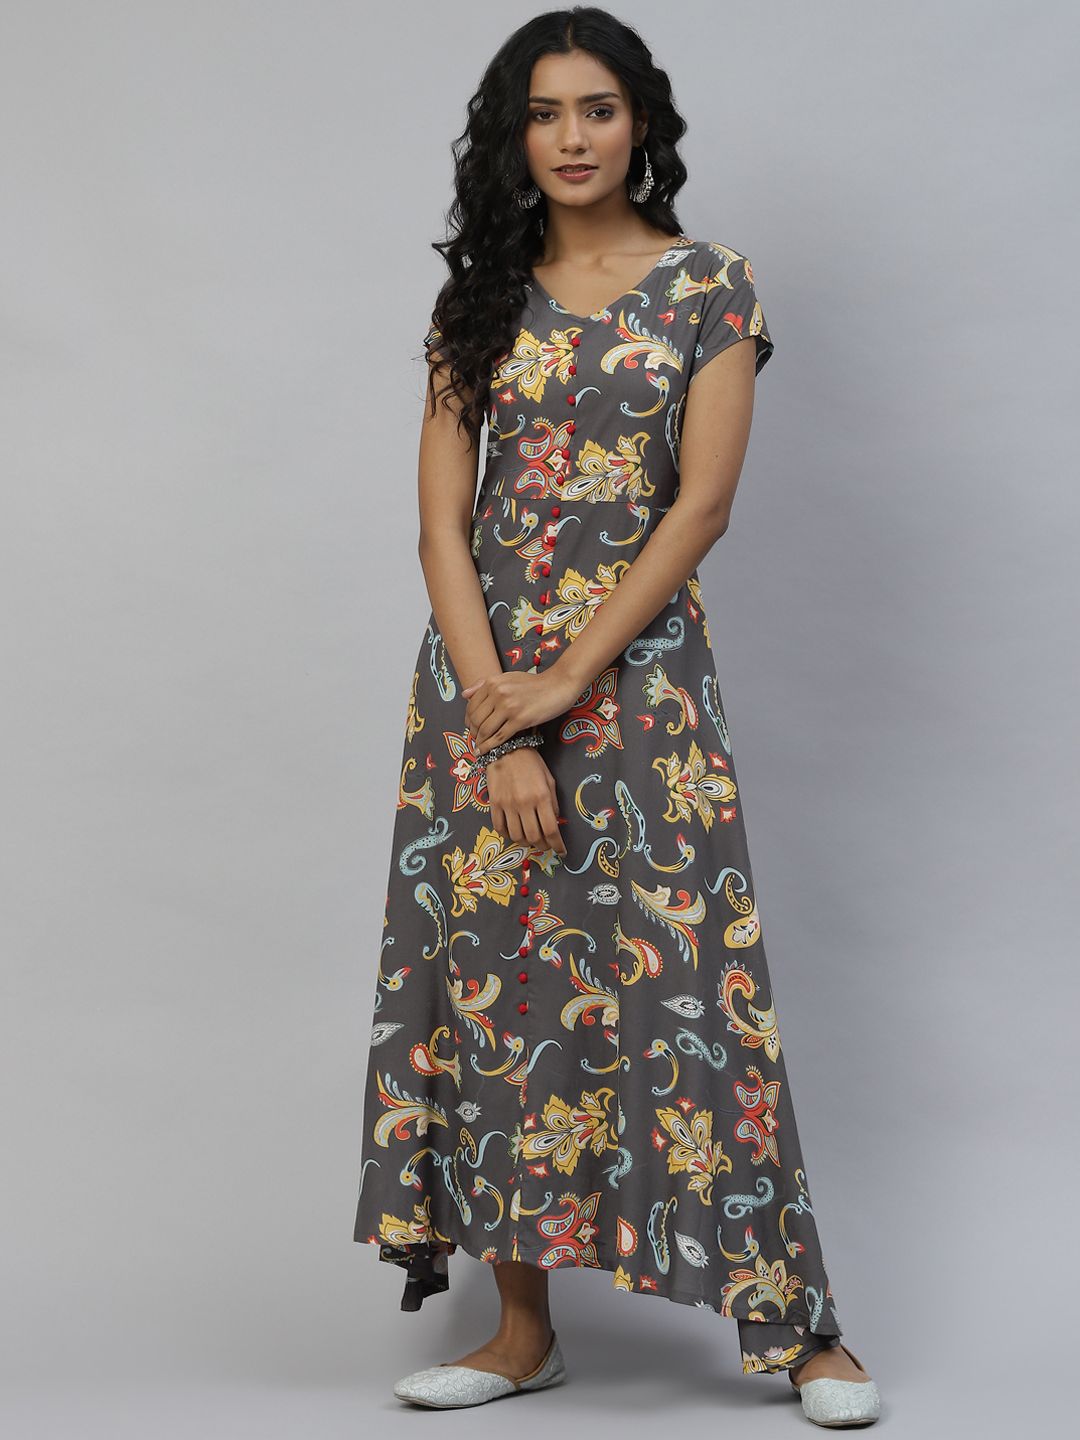 DESI BEATS Grey Ethnic Motifs Maxi Dress Price in India